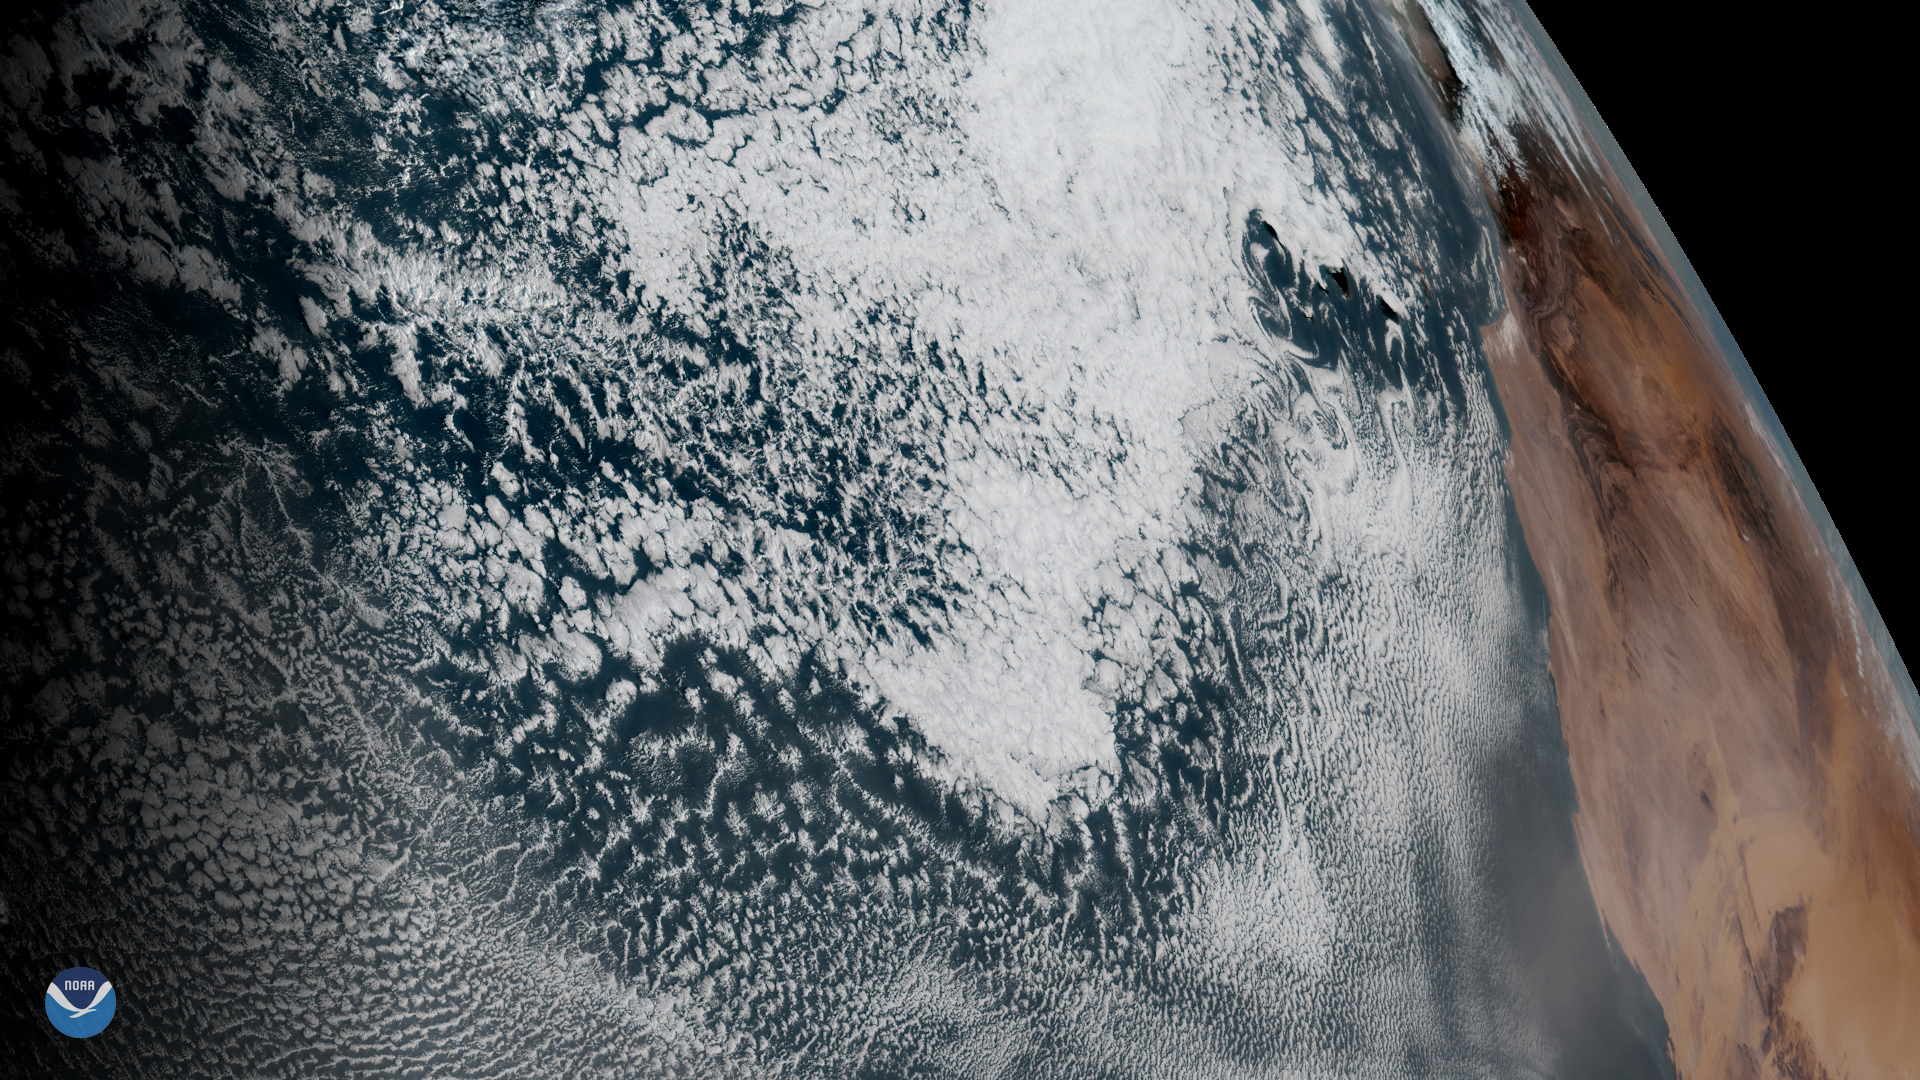 Von Kármán Vortices Make Swirling Cloud Patterns off Canary Islands